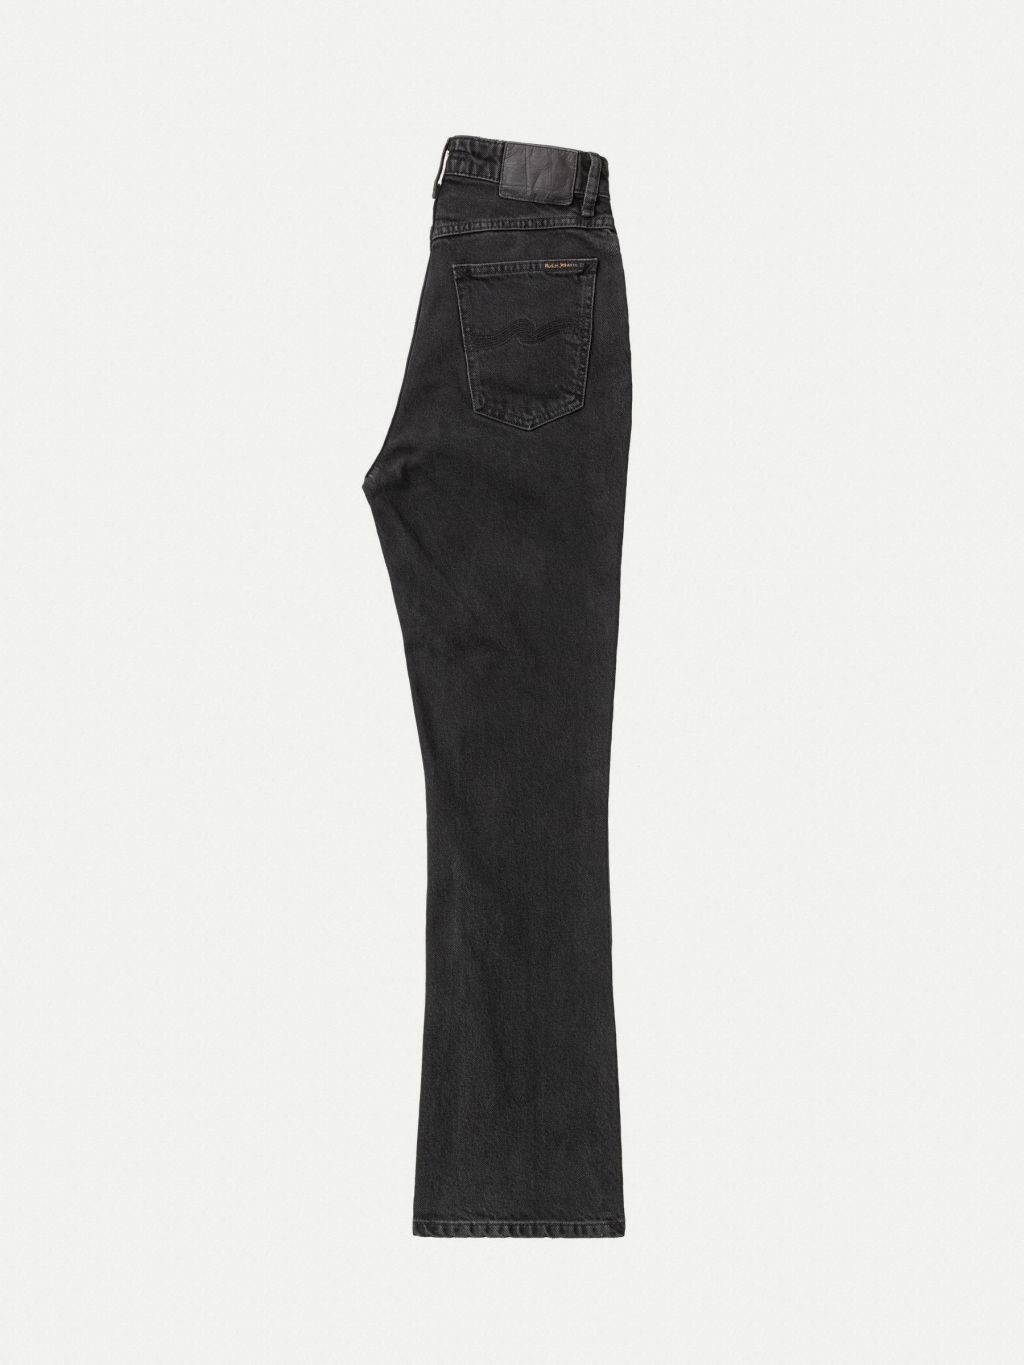 Rowdy Ruth High Waist Jeans - Almost Black 30/30